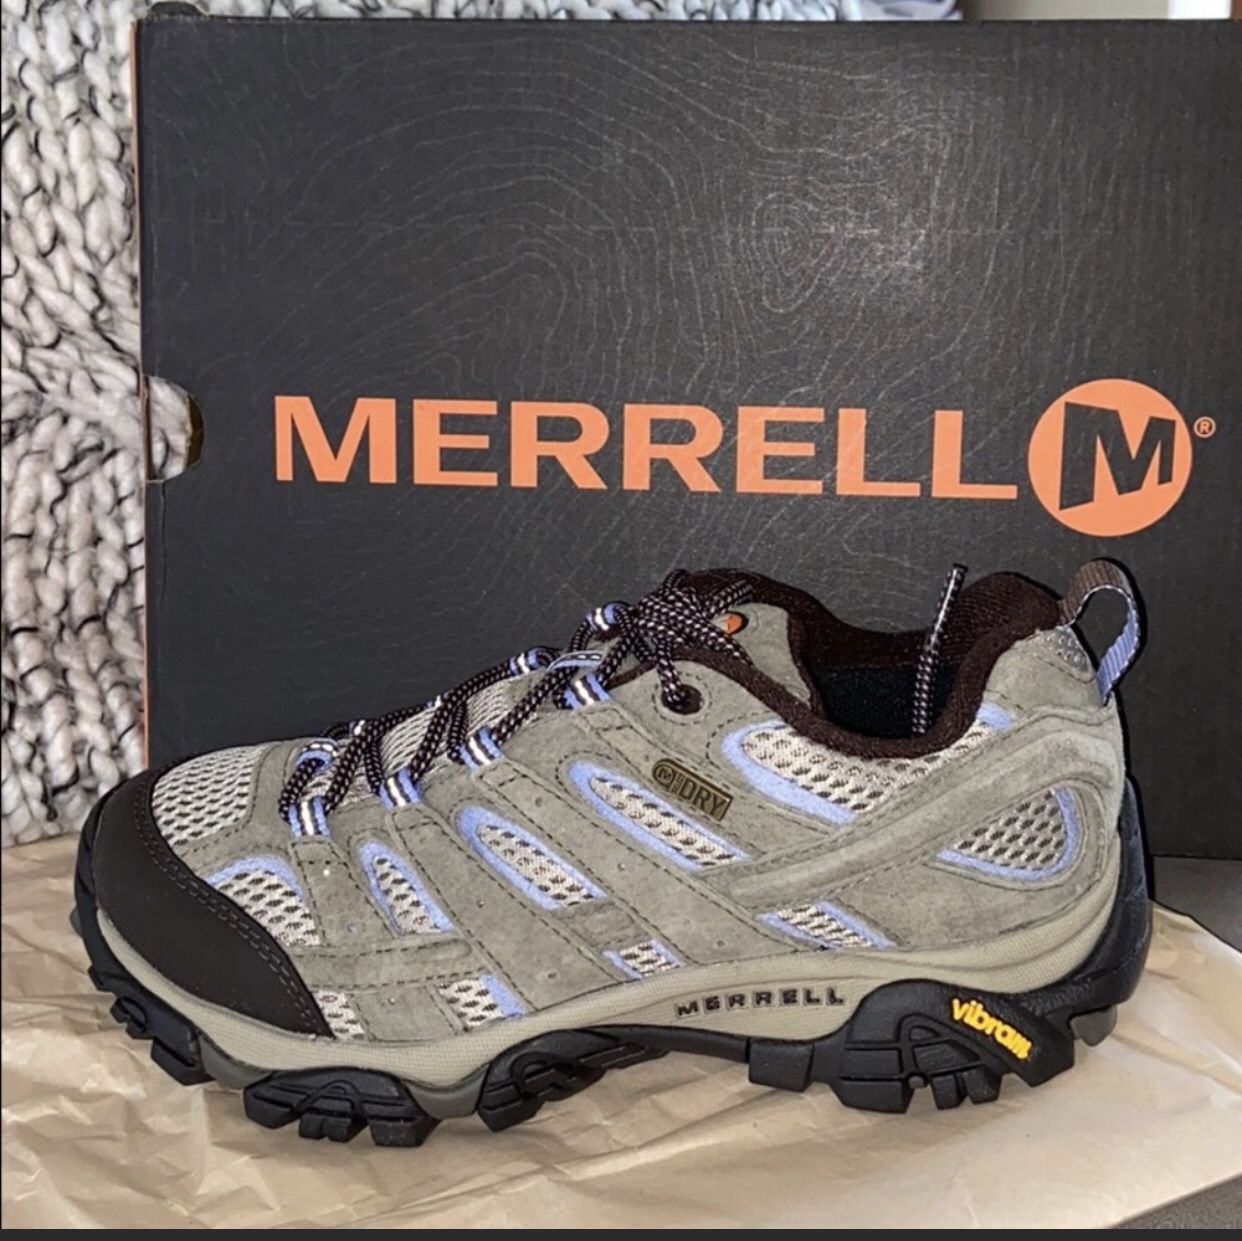 Merrell hiking shoes 6